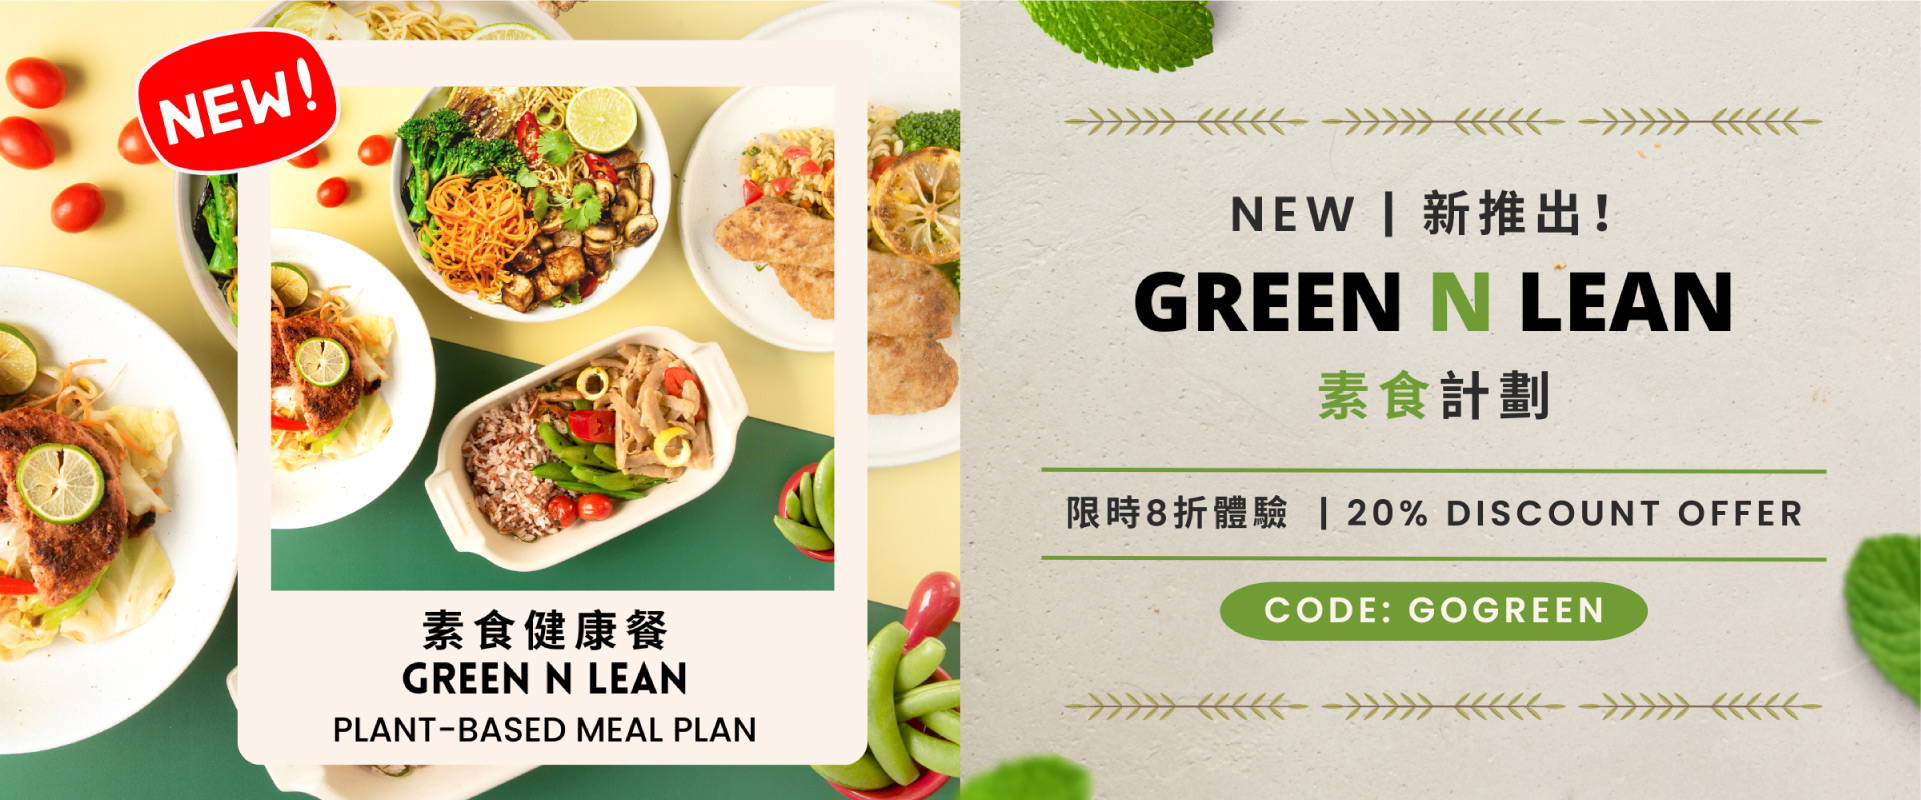 FITTERY Green N Lean Meal Plan